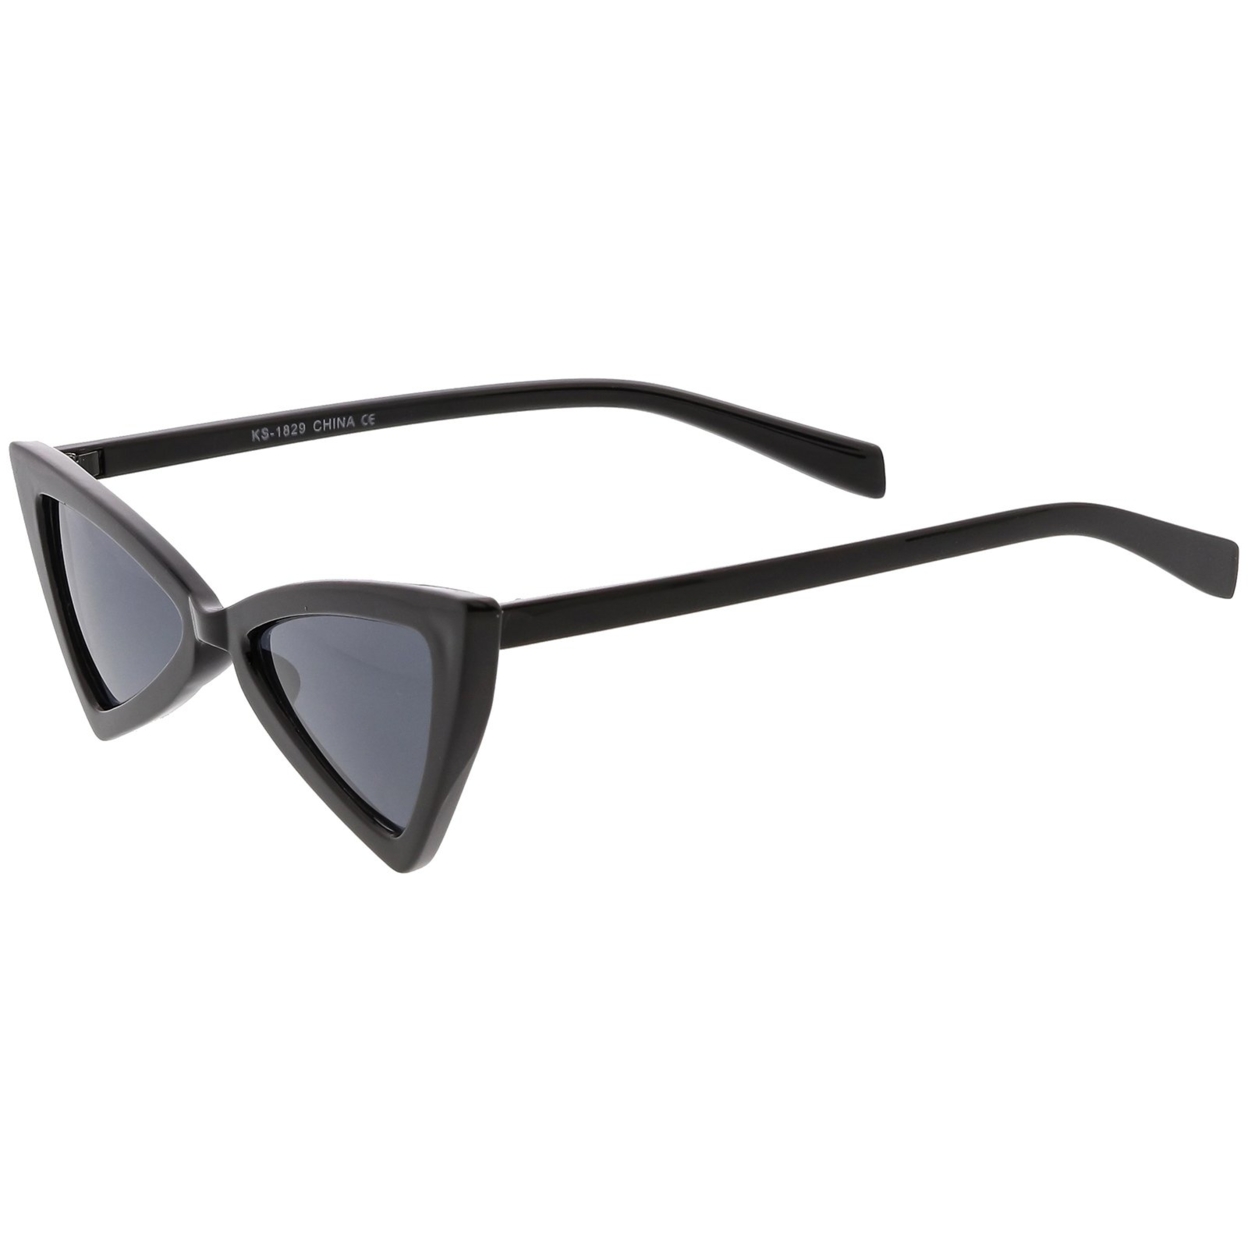 Women's Thin Extreme Cat Eye Sunglasses Neutral Colored Flat Lens 51mm - White / Smoke